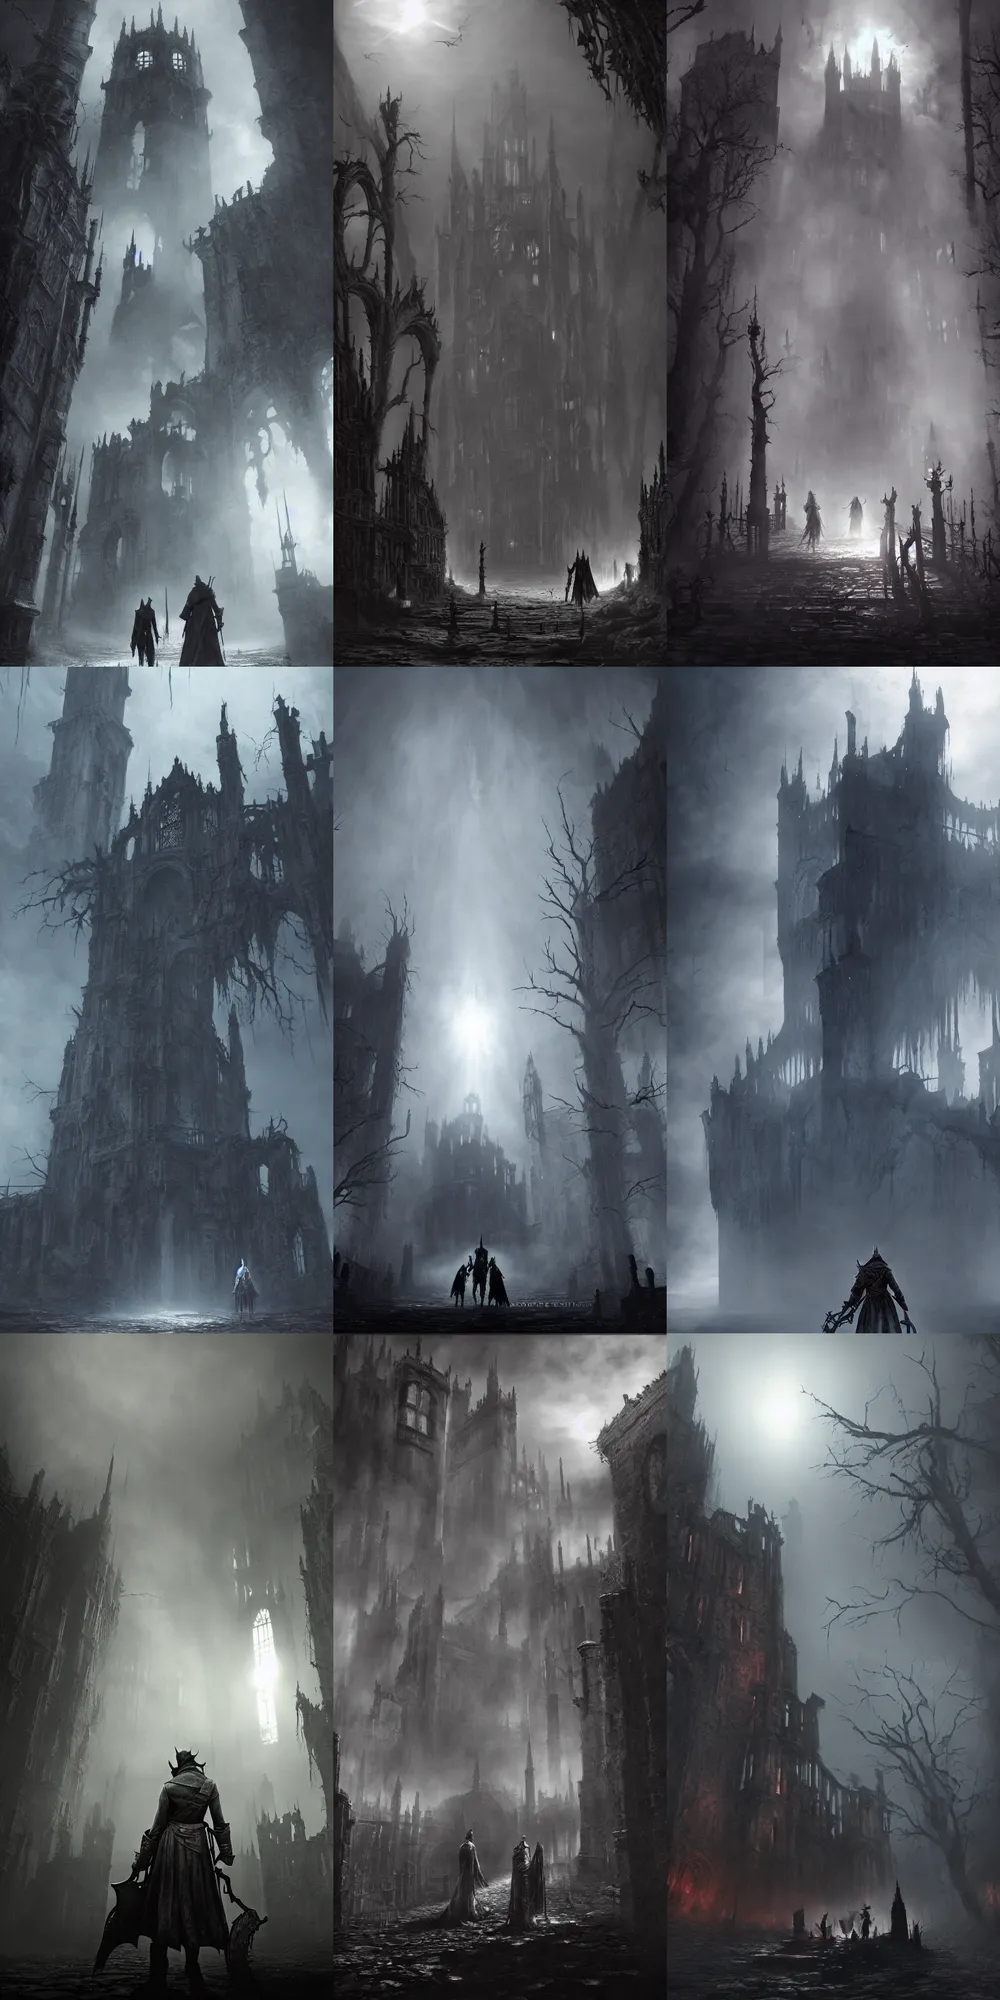 Prompt: bloodborne and silent hill, castle ruins, volumetric fog, god rays, shadowy figures lurking, stark lighting, by Brom, artstation.